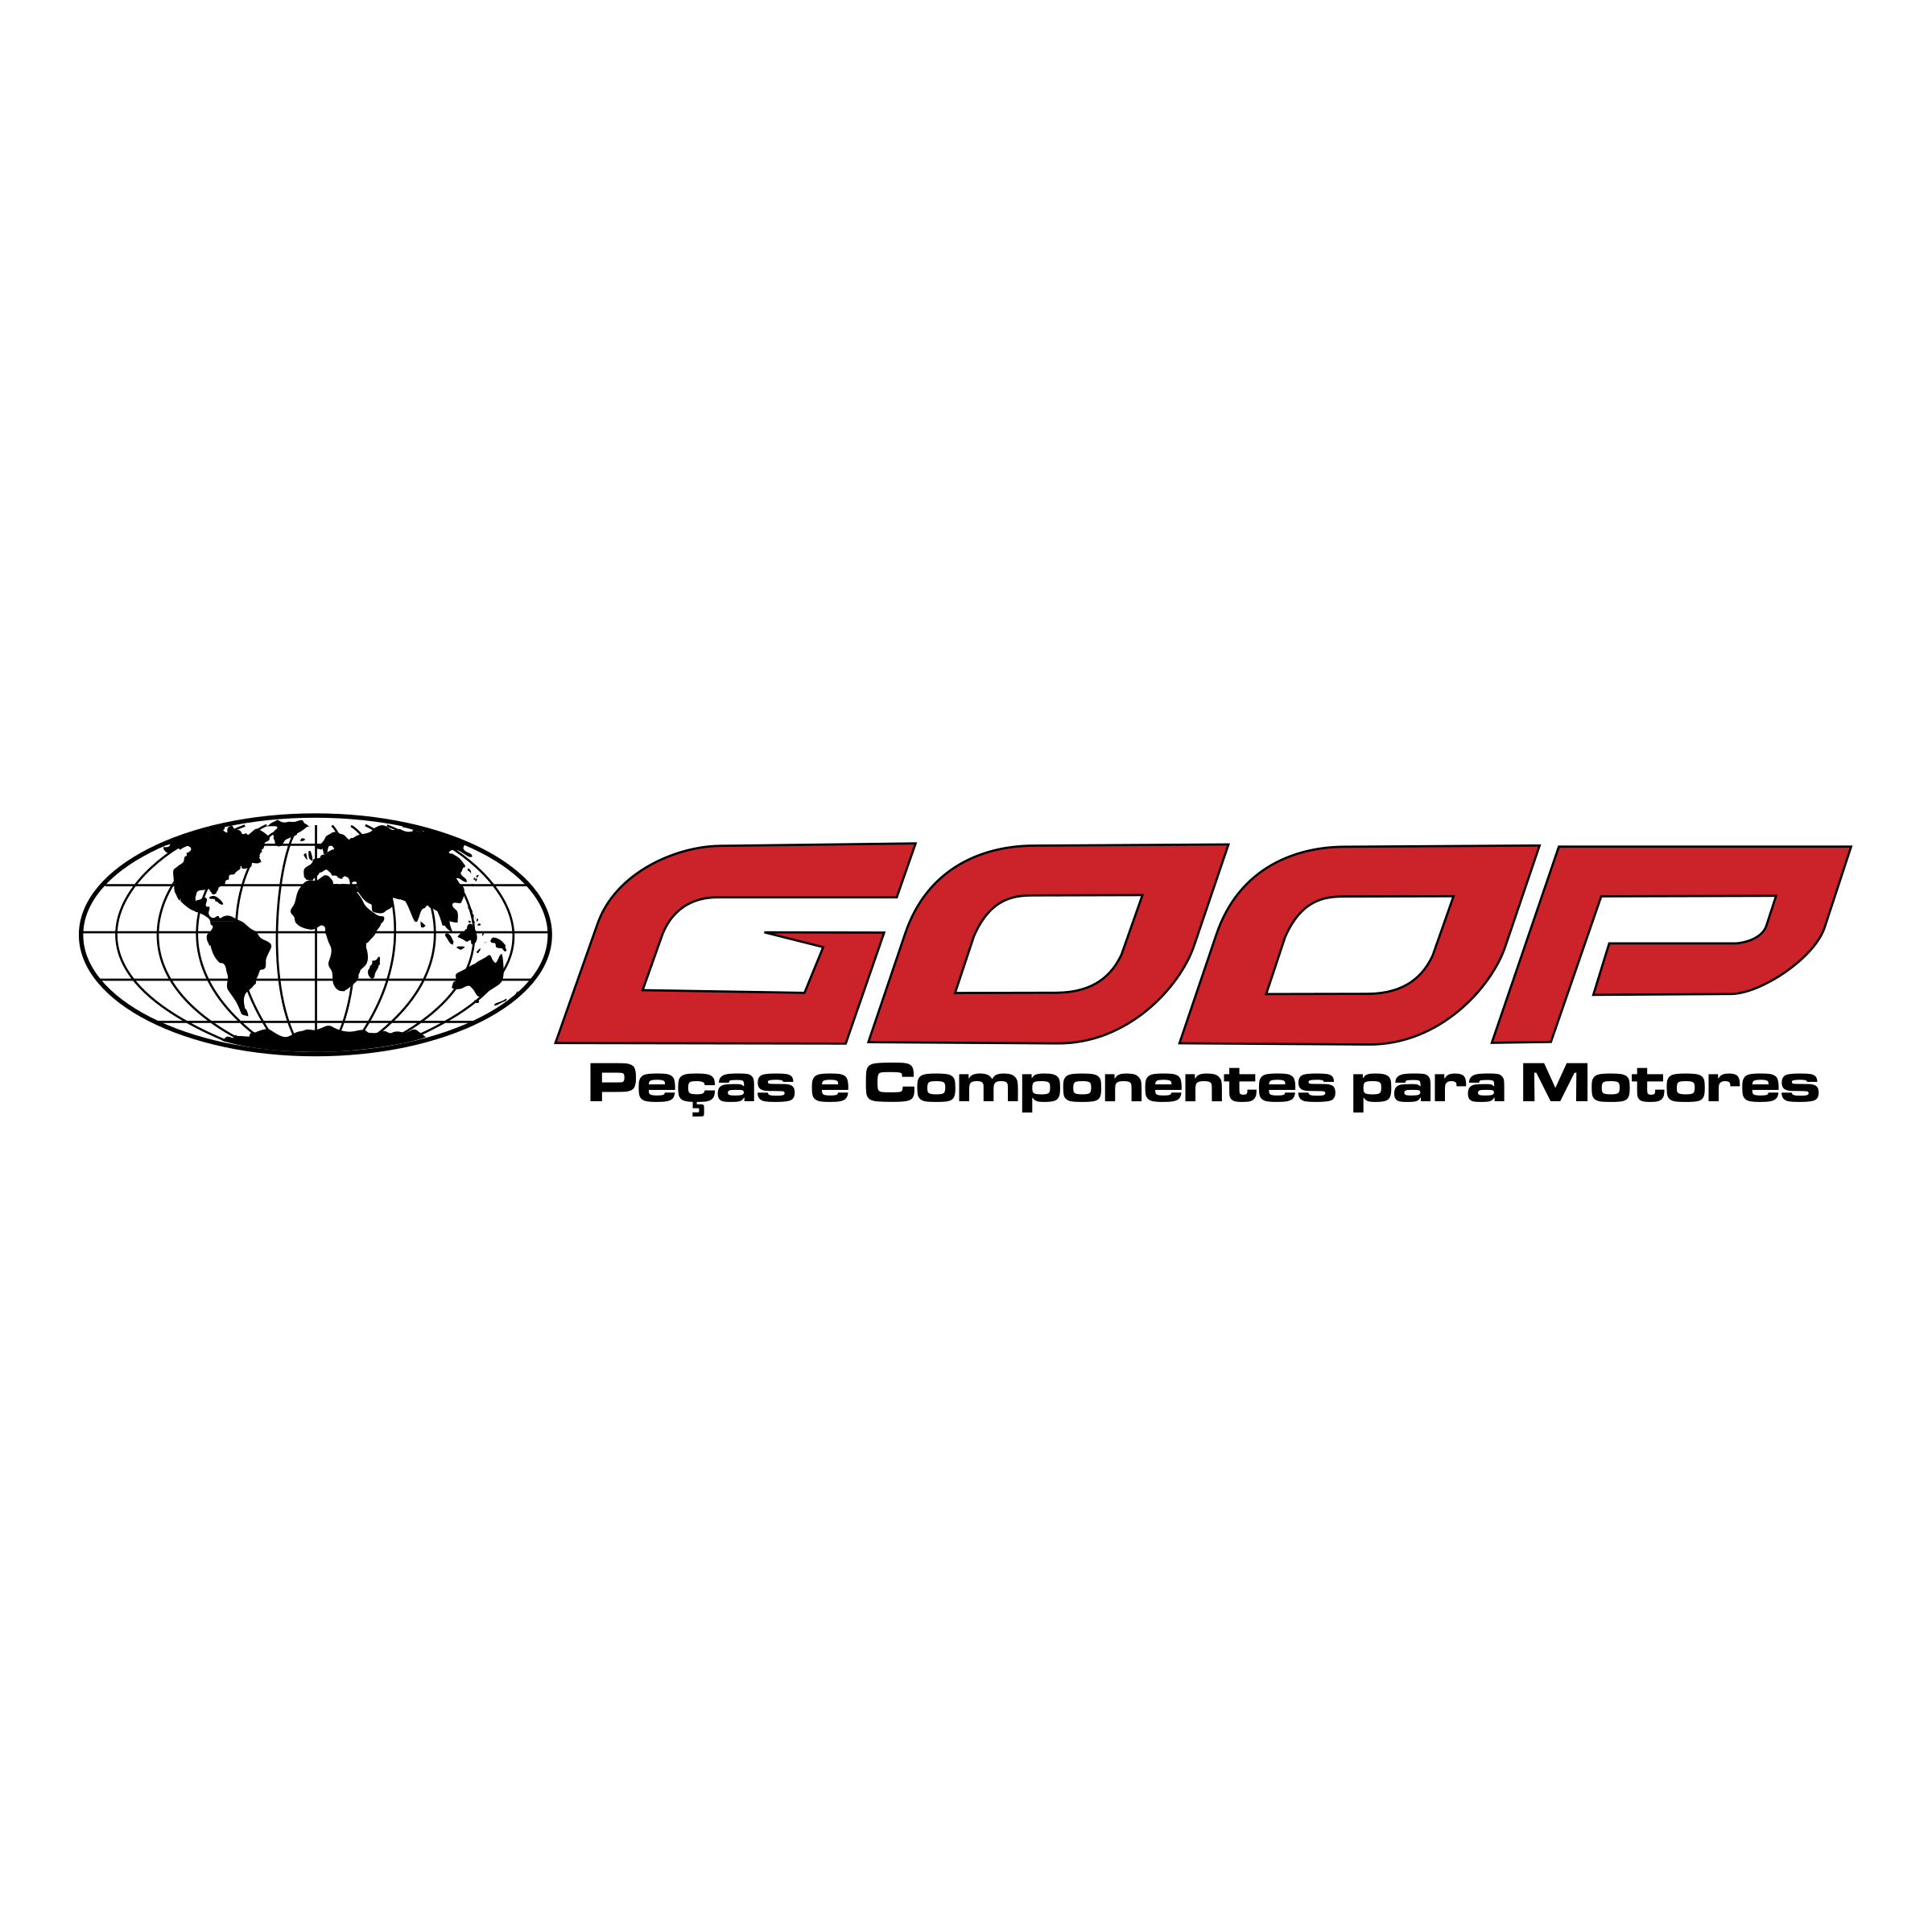 Goop Logo - GOOP Logo PNG Transparent & SVG Vector - Freebie Supply